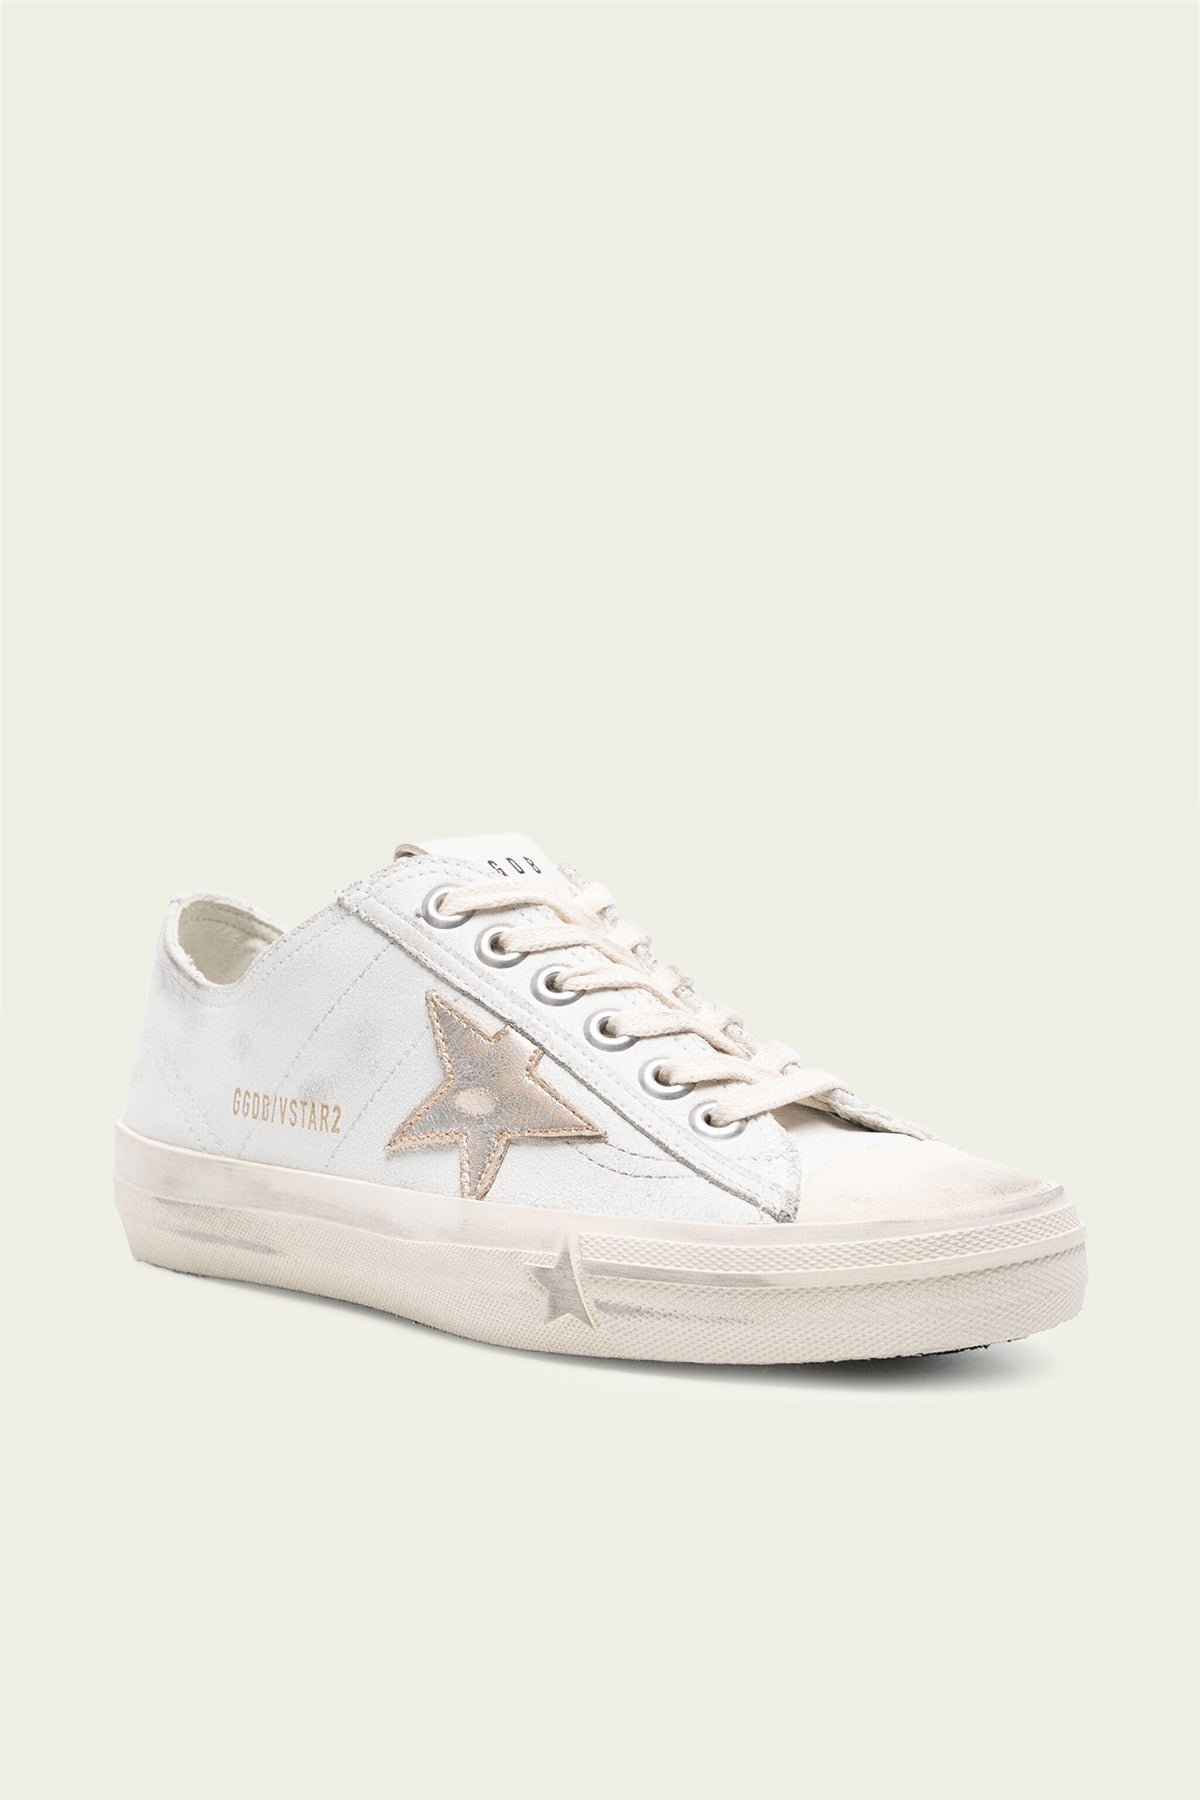 V-Star White Gold Star Leather Sneaker - shop-olivia.com